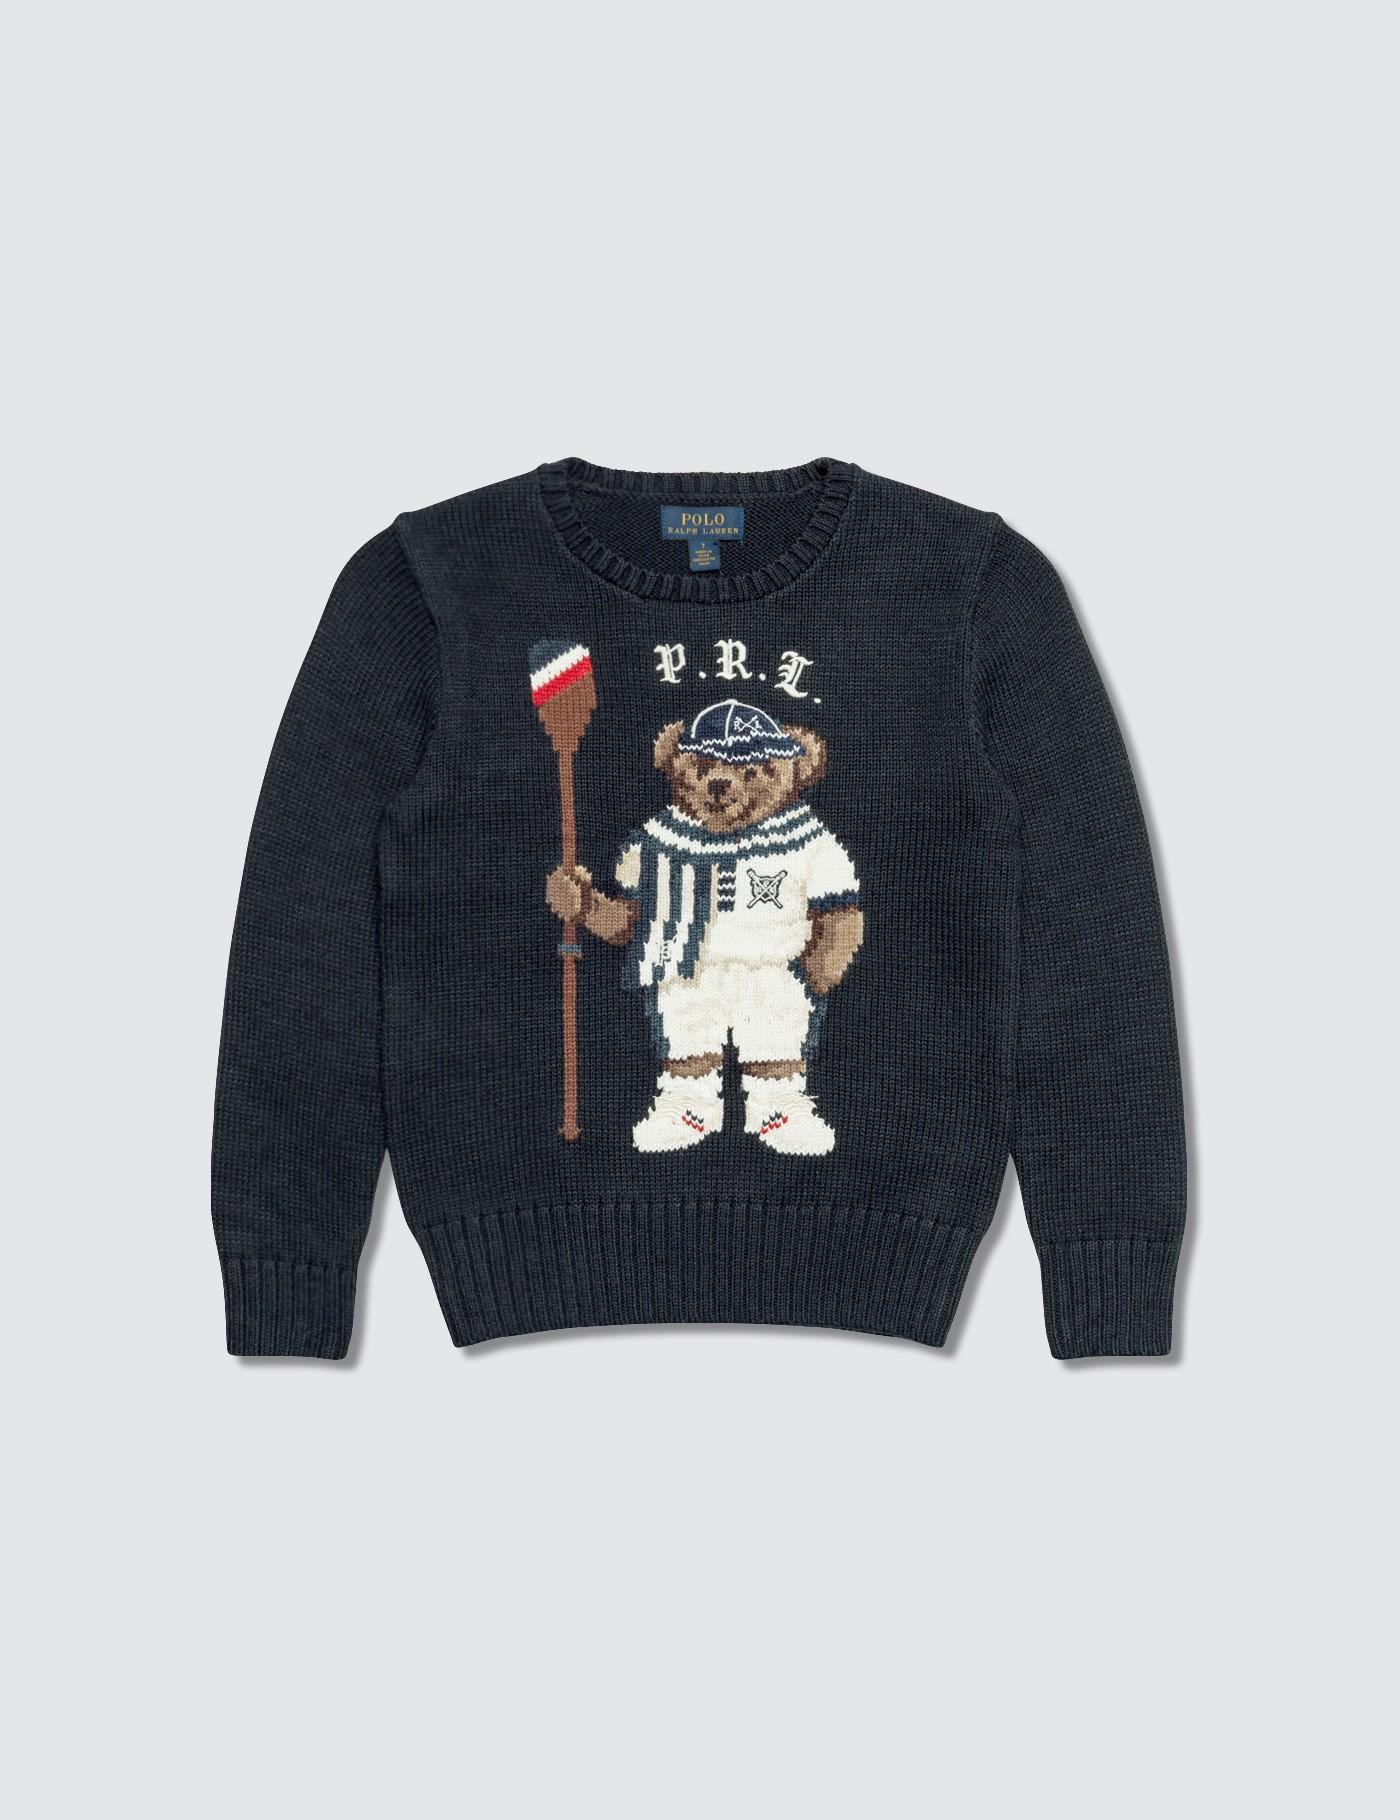 Polo Ralph Lauren Rowing Bear Cotton Kids Sweater in Blue for Men - Lyst